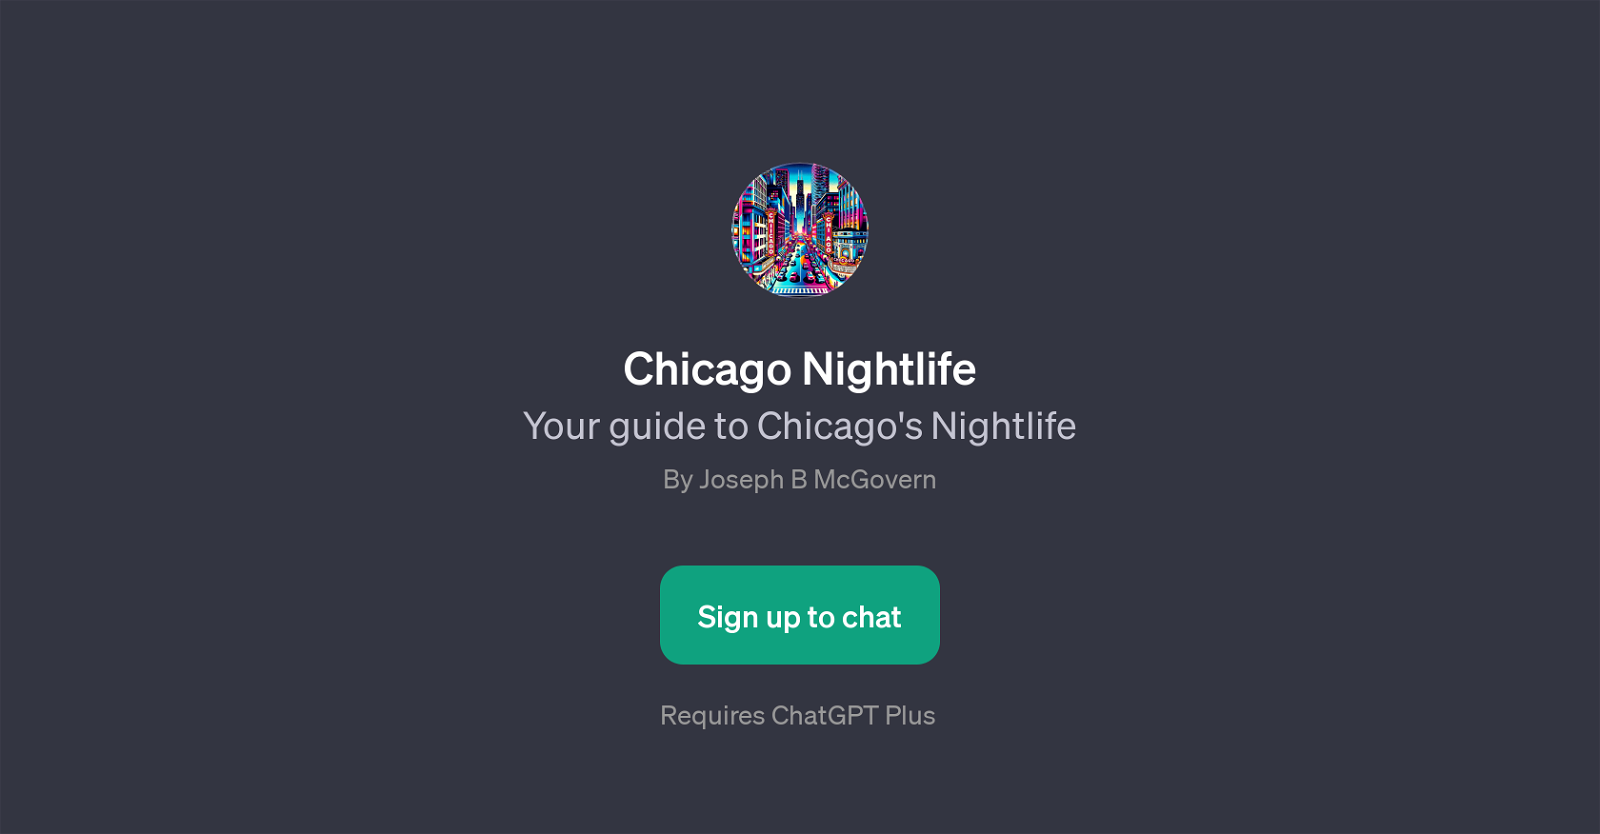 Chicago Nightlife website